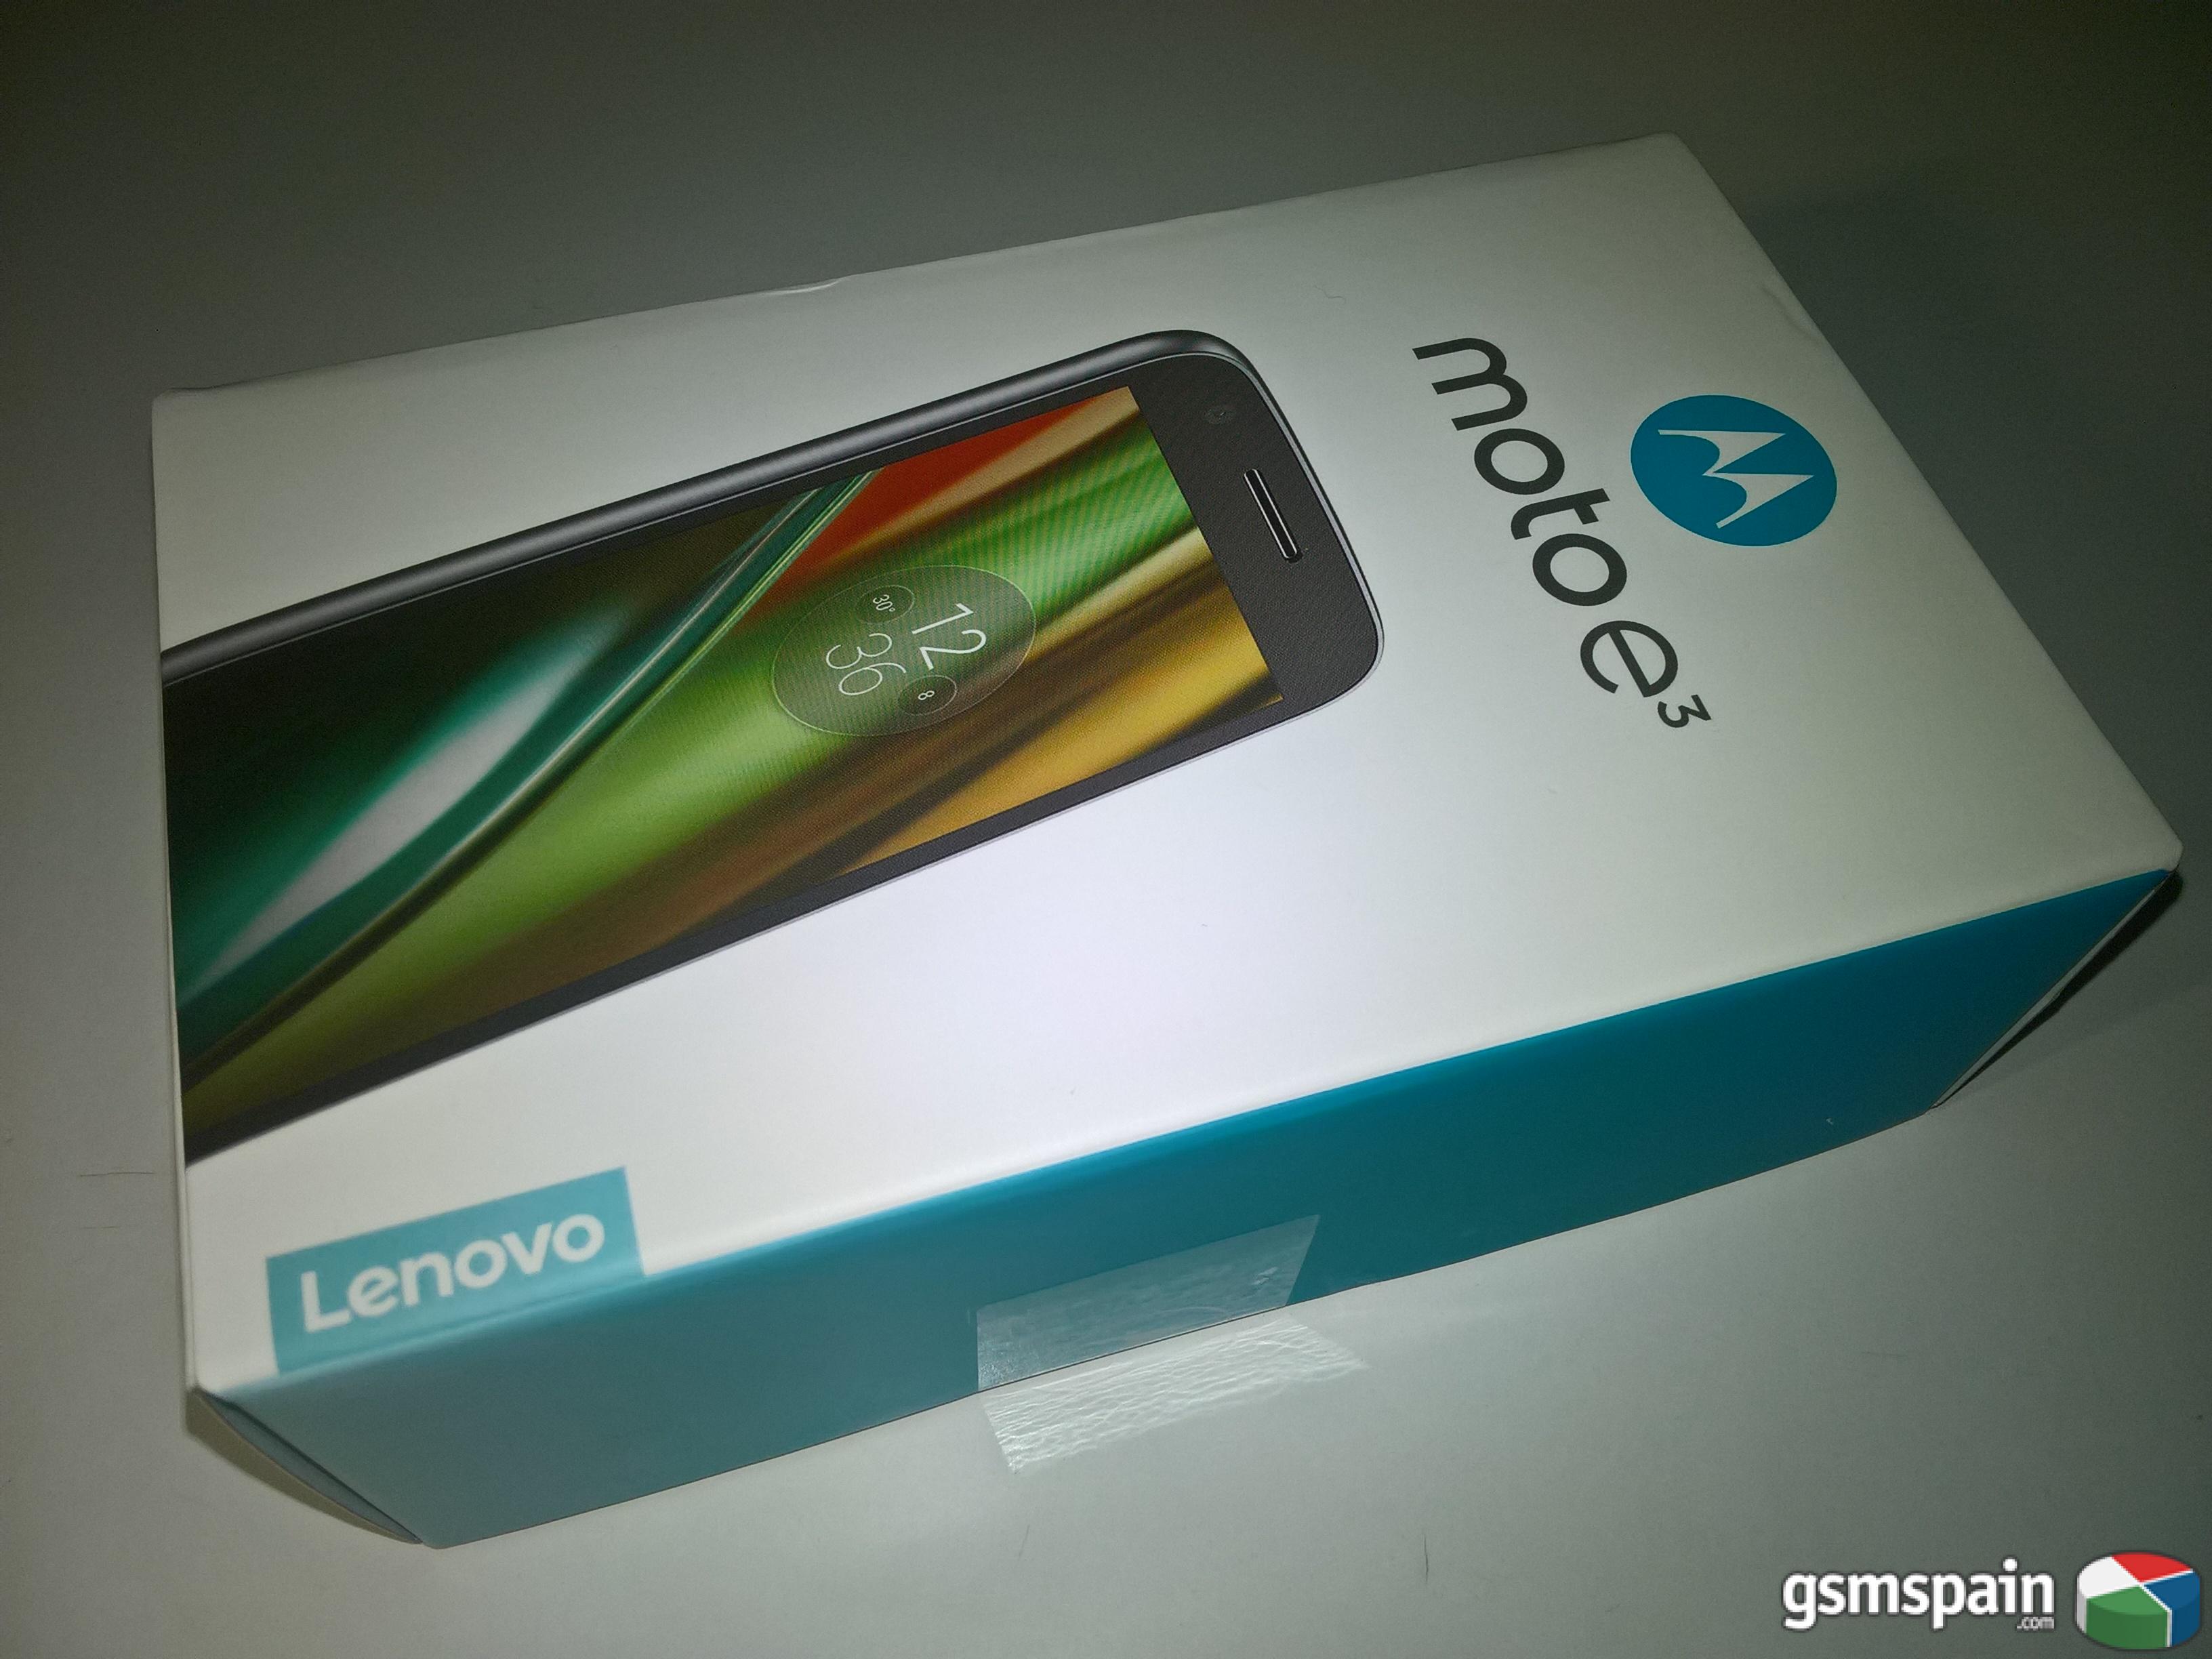 [VENDO] Motorola Lenovo Moto E E3 3 generacin XT1700 negro, nuevo y precintado. 94,90 